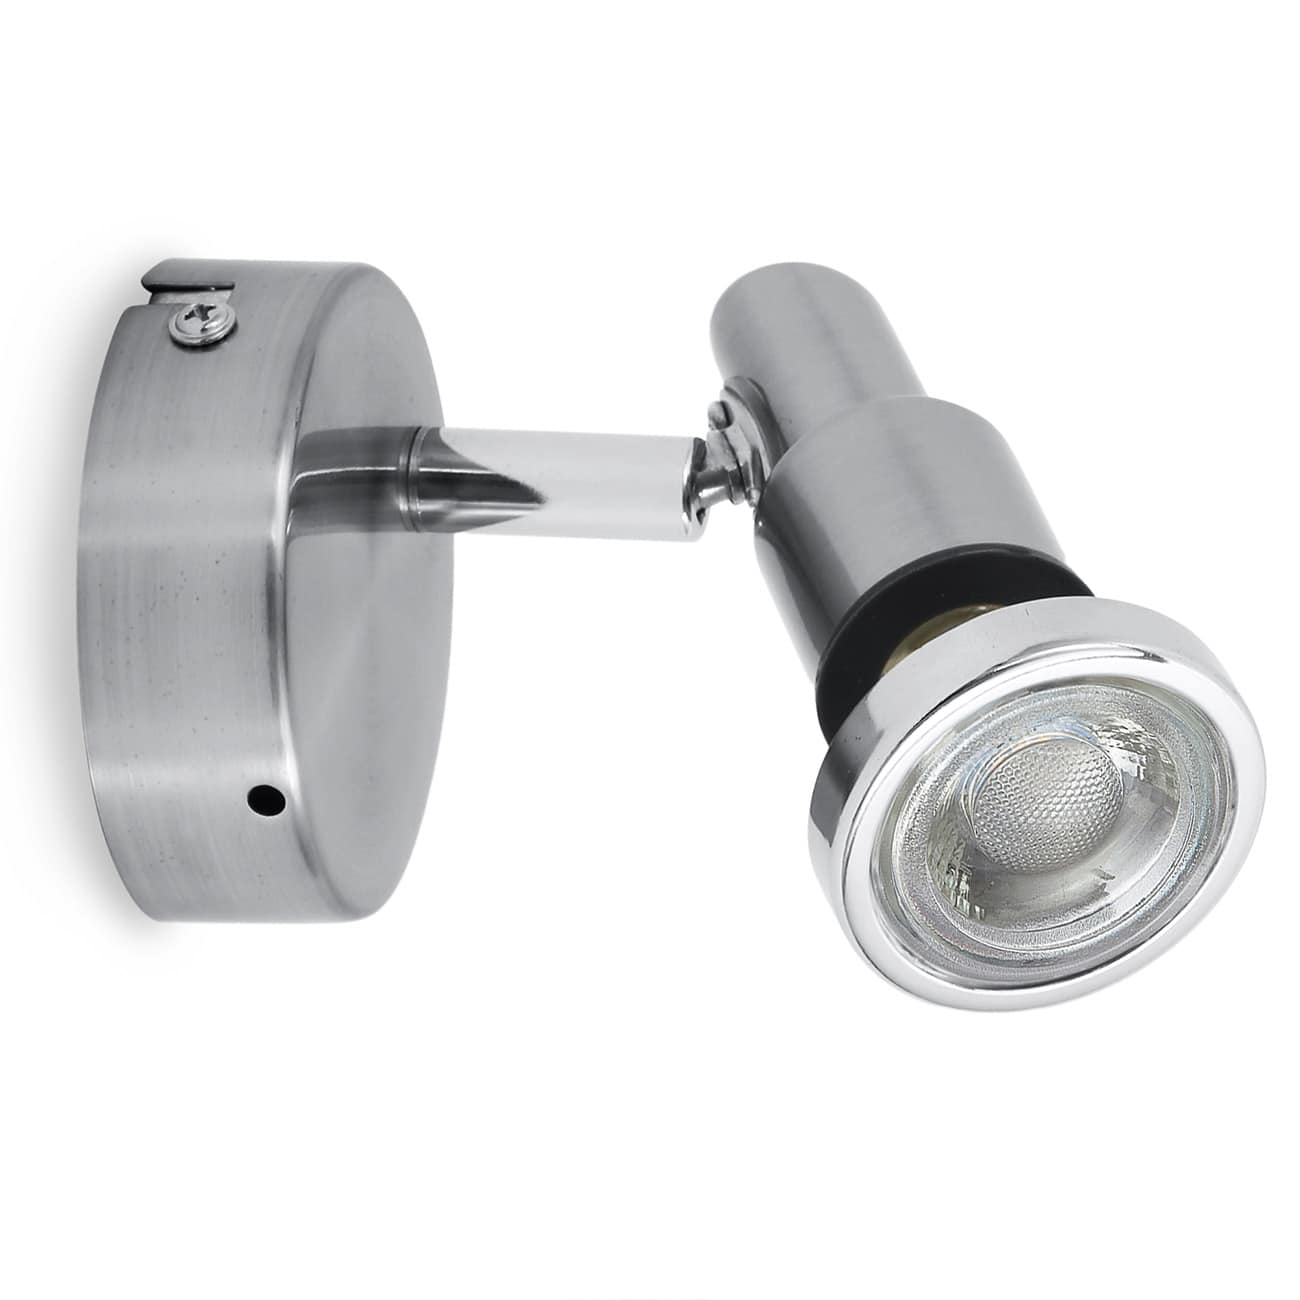 LED Deckenspot 8x10cm - 1-flammig - Bad Deckenleuchte IP44 GU10 5W 400lm Spot dreh- & schwenkbar warmweiß | Matt-Nickel Chrom - 6